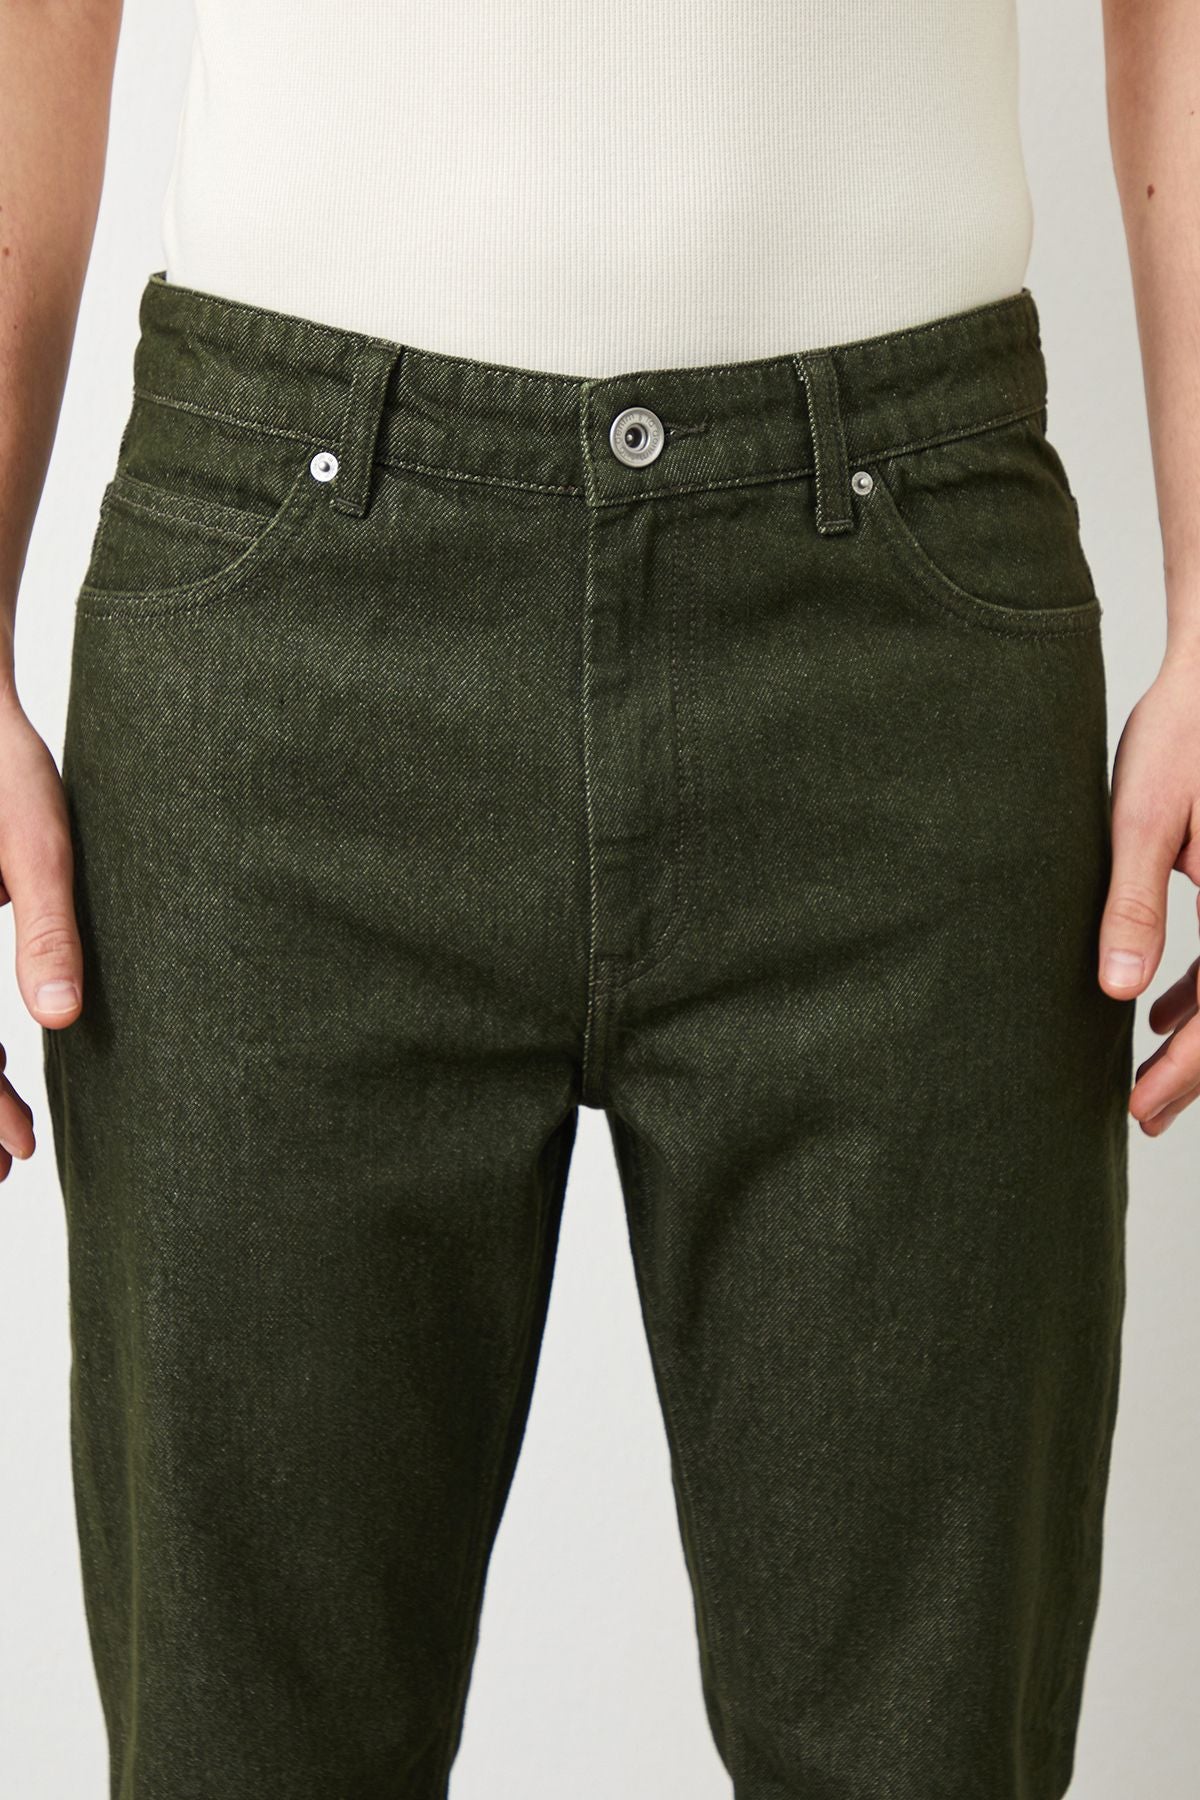 Drej Loose Fit Green Men's Jeans